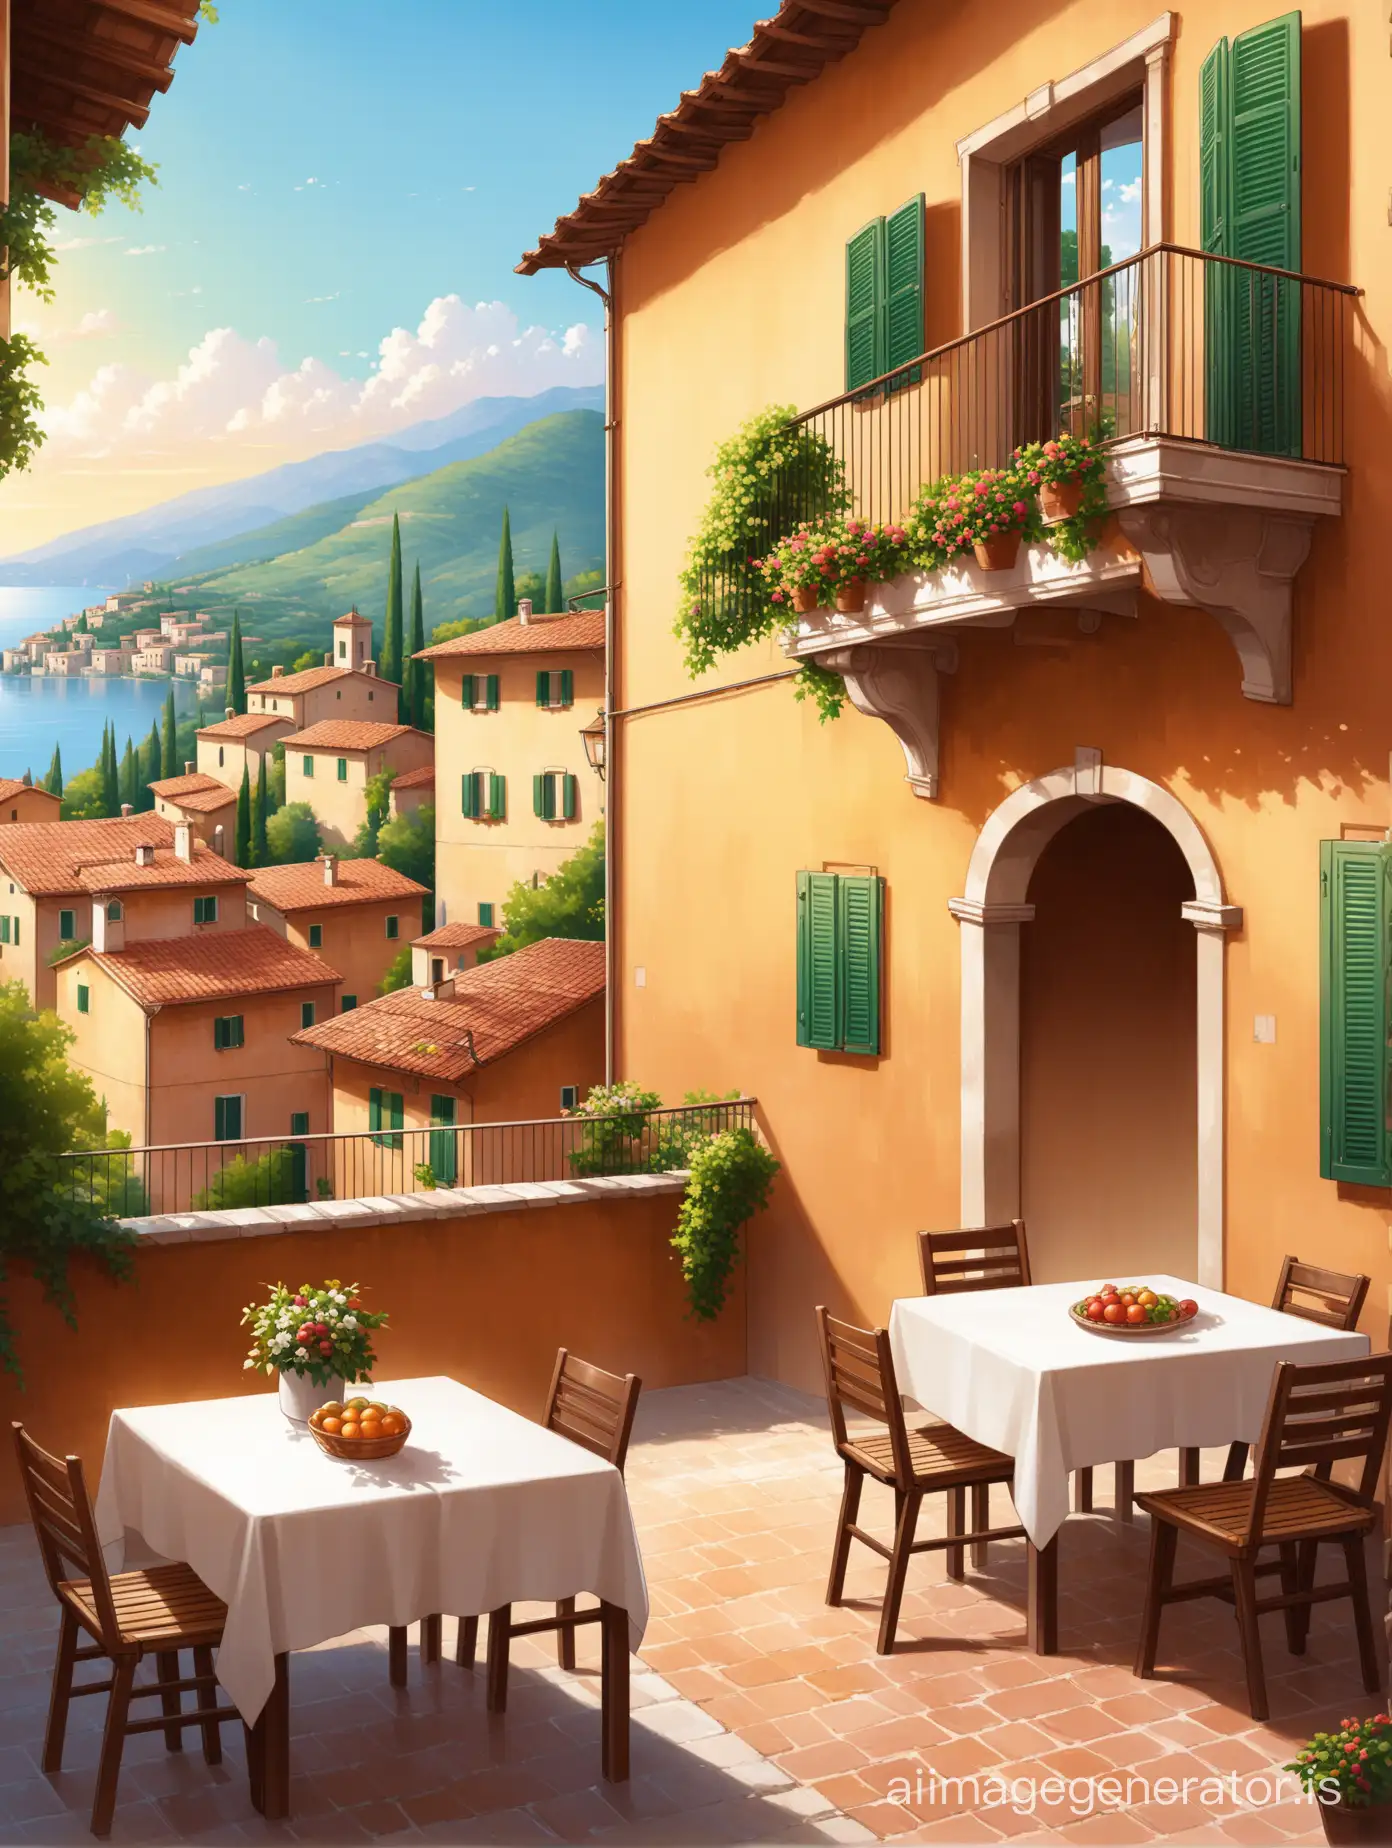 Picturesque-Italian-Village-Scene-Sunny-Terrace-Overlooking-Rustic-Charm